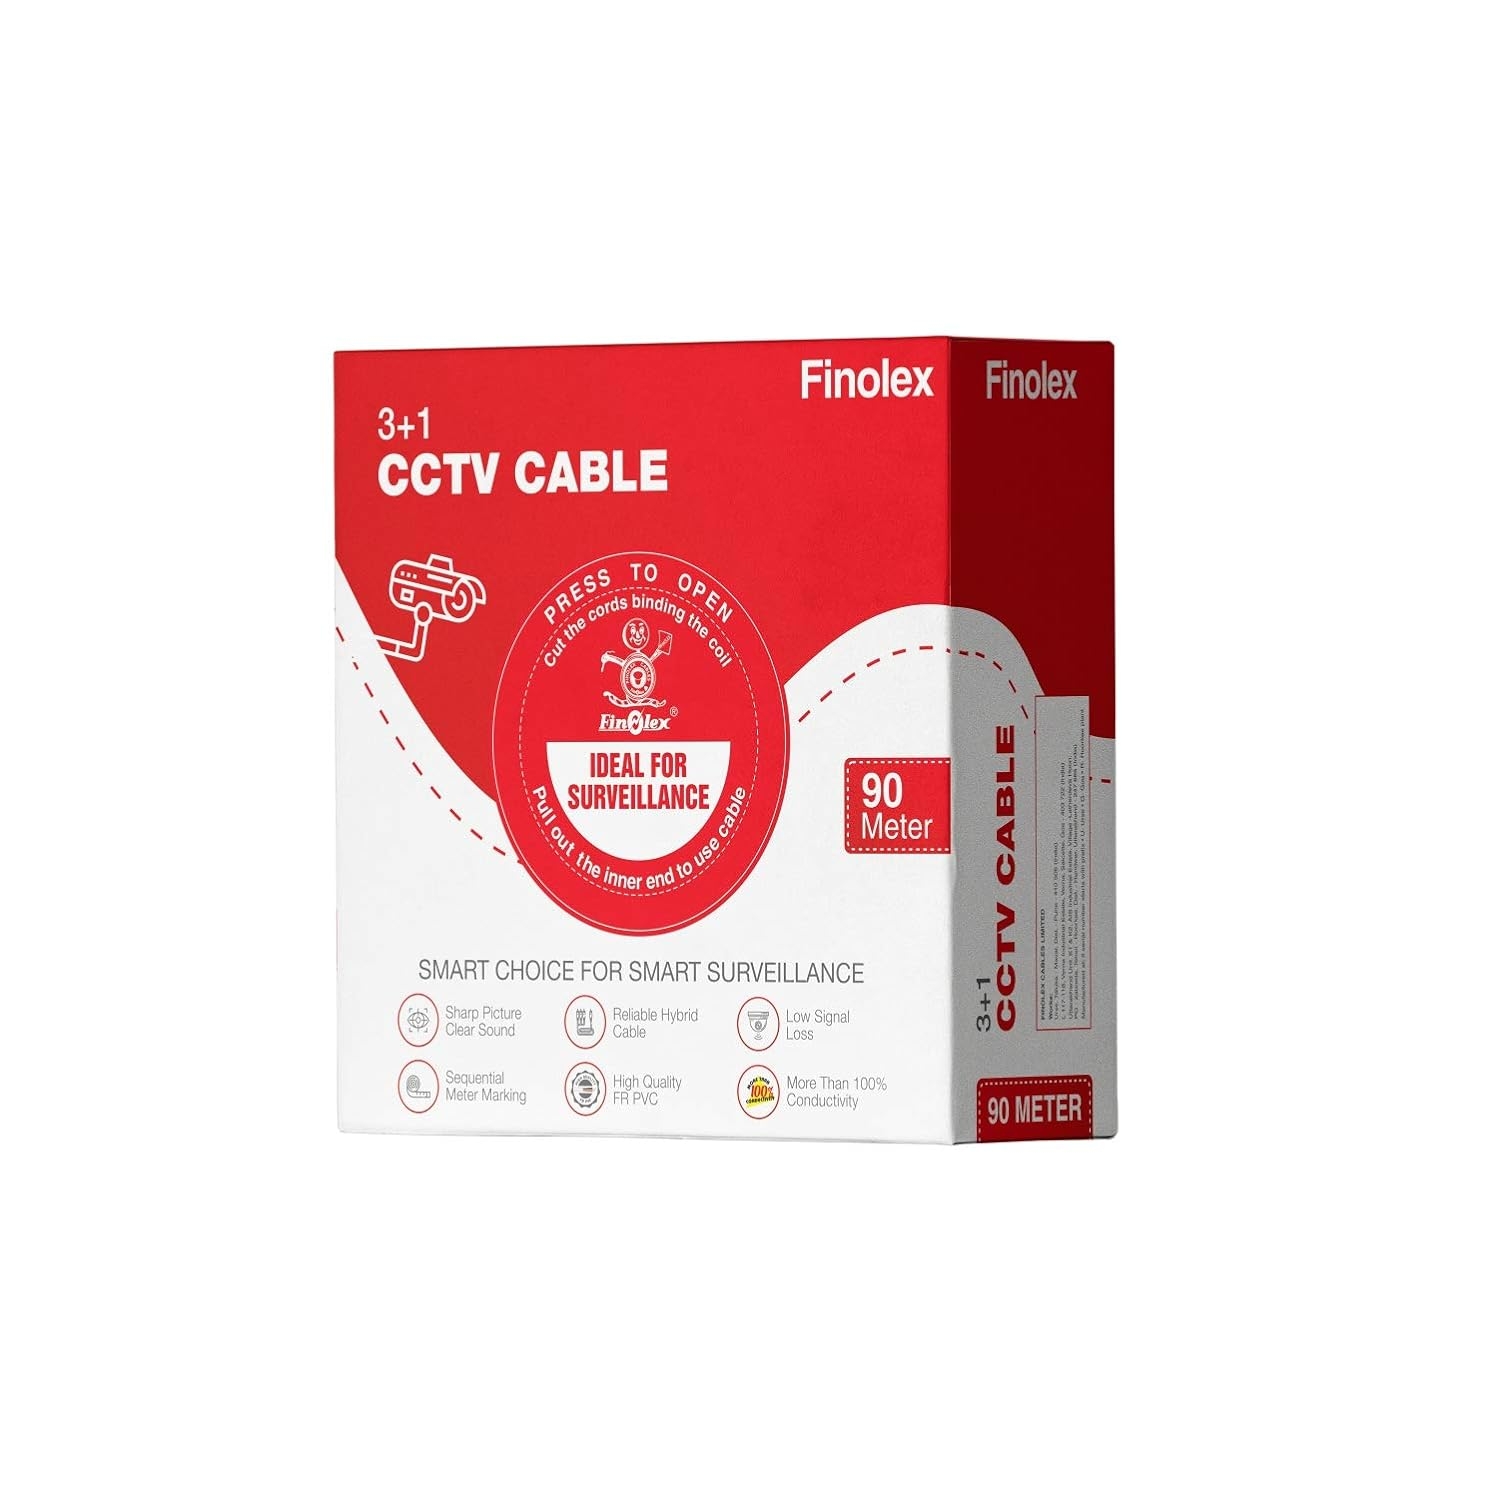 Finolex CCTV Cable (3+1) 90 M, Black, Red